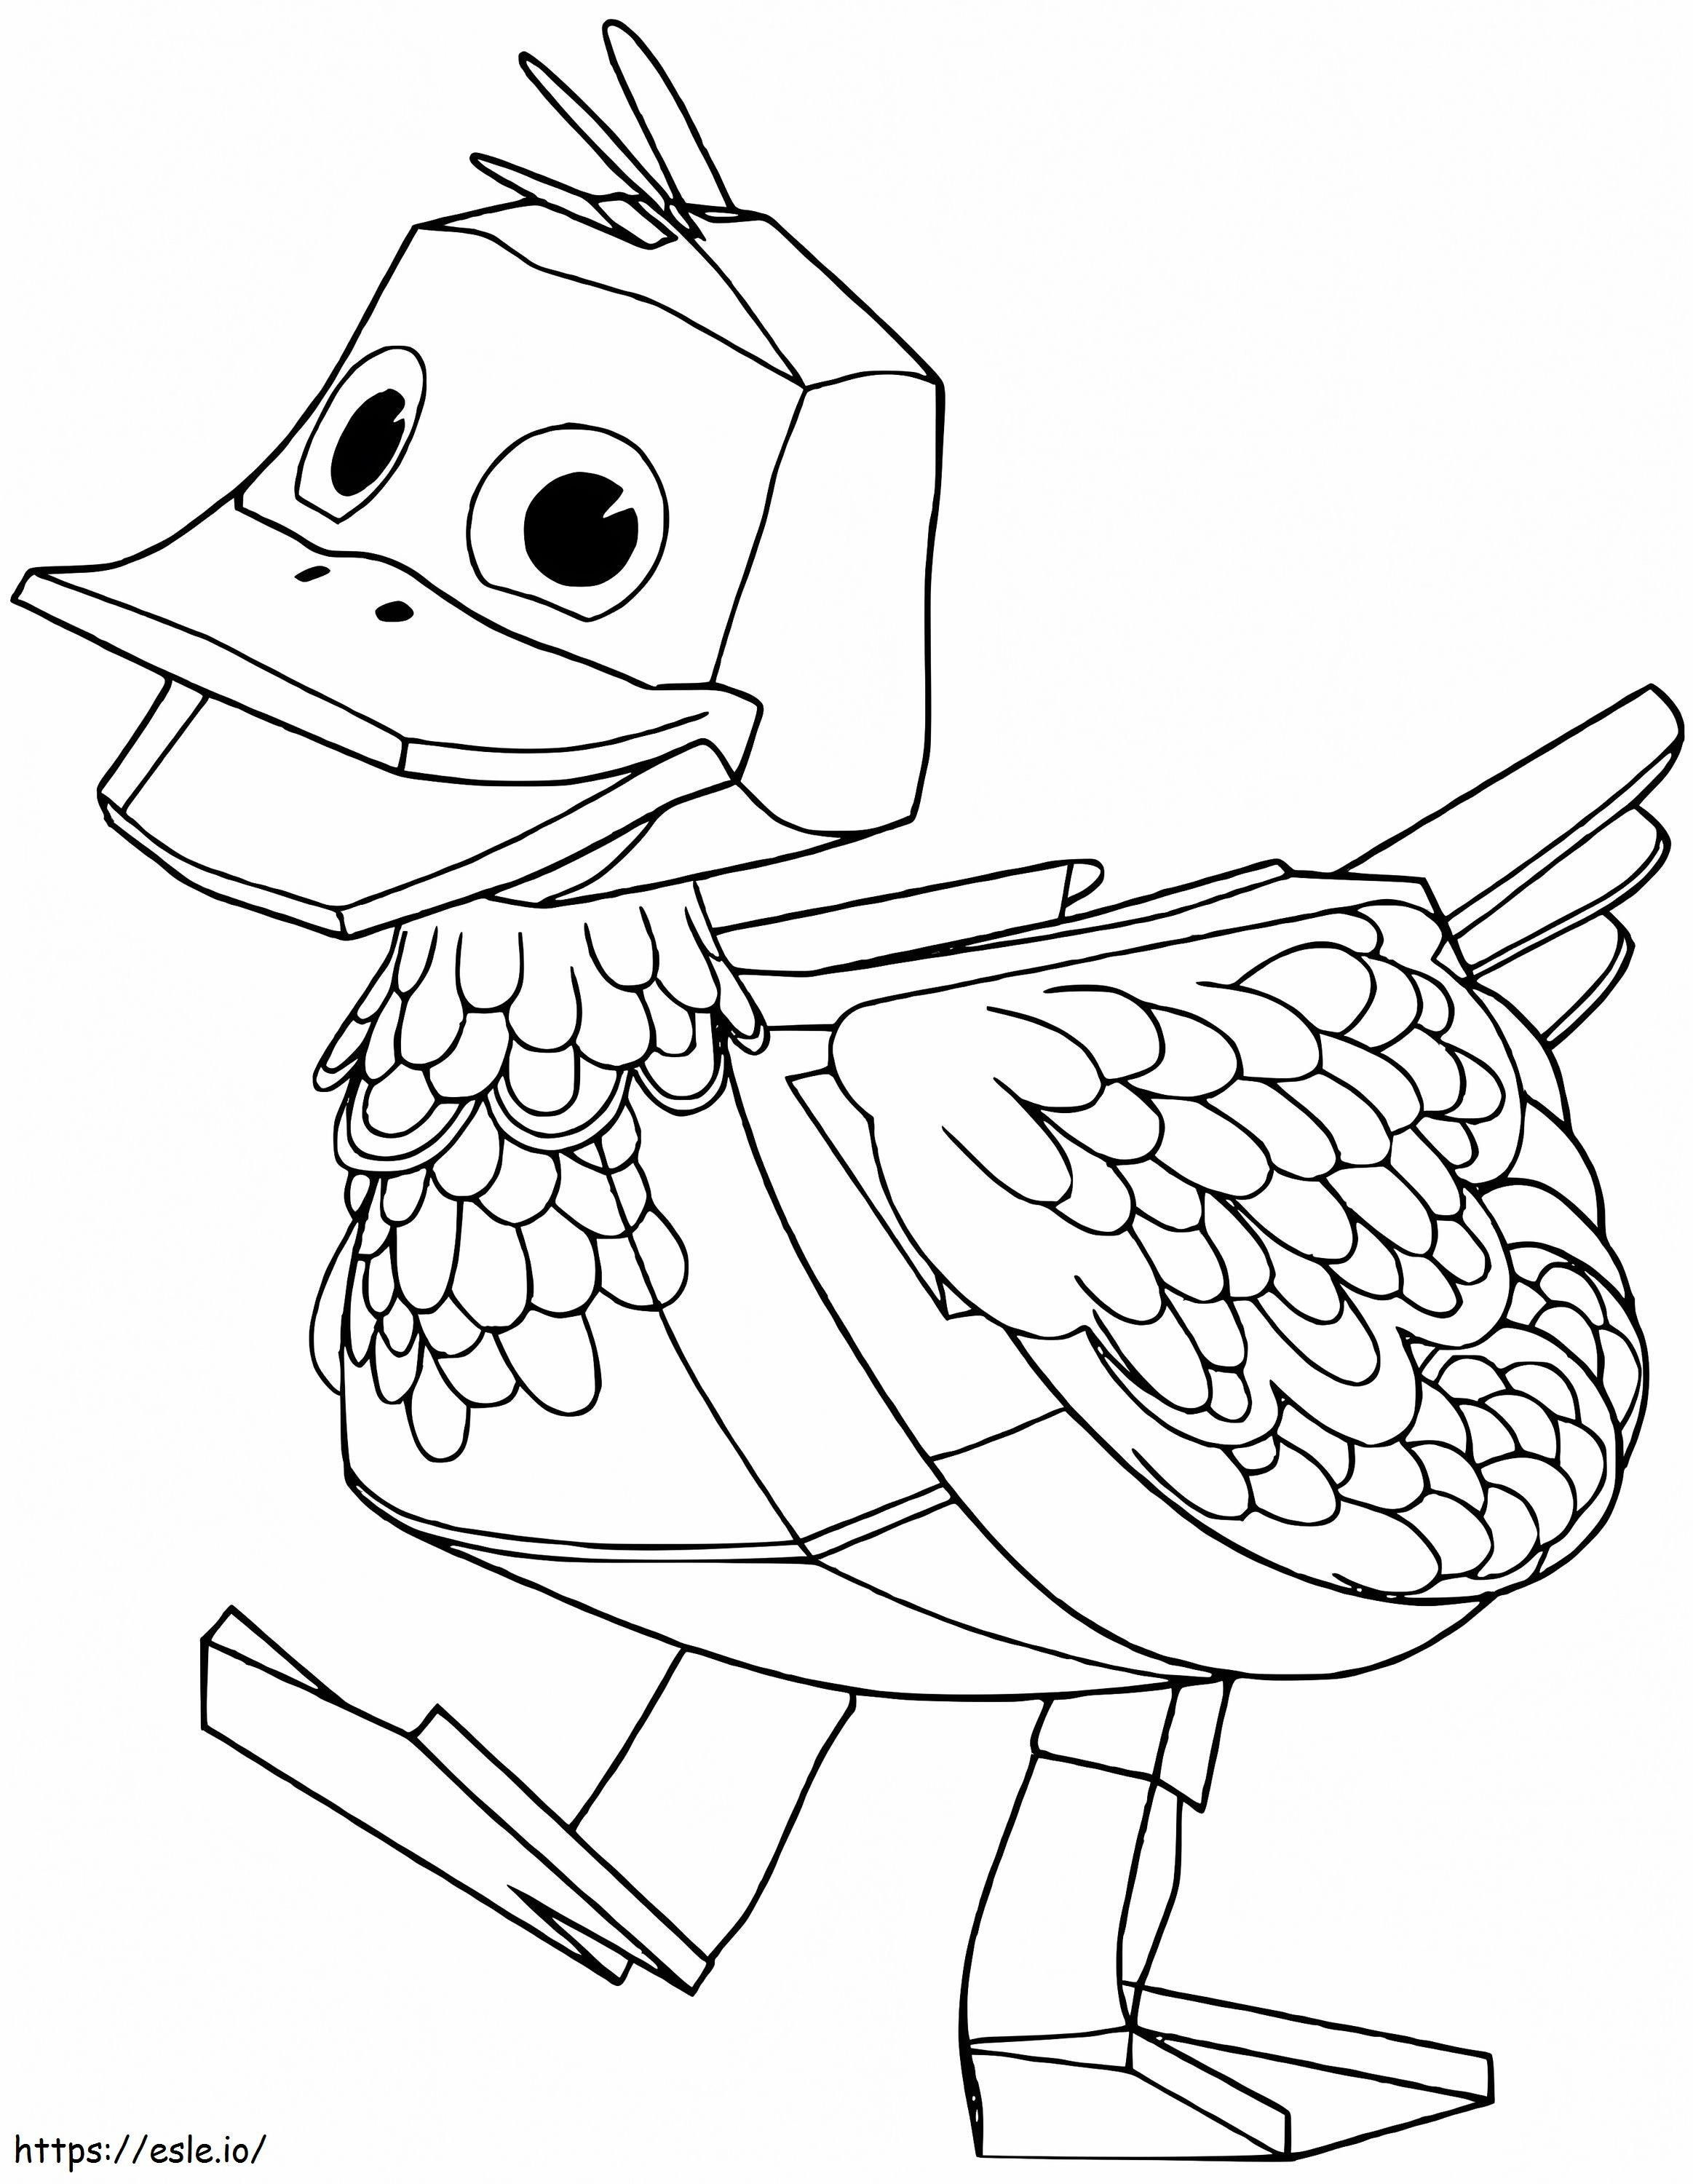 Coloriage Quack de Zack et Quack à imprimer dessin